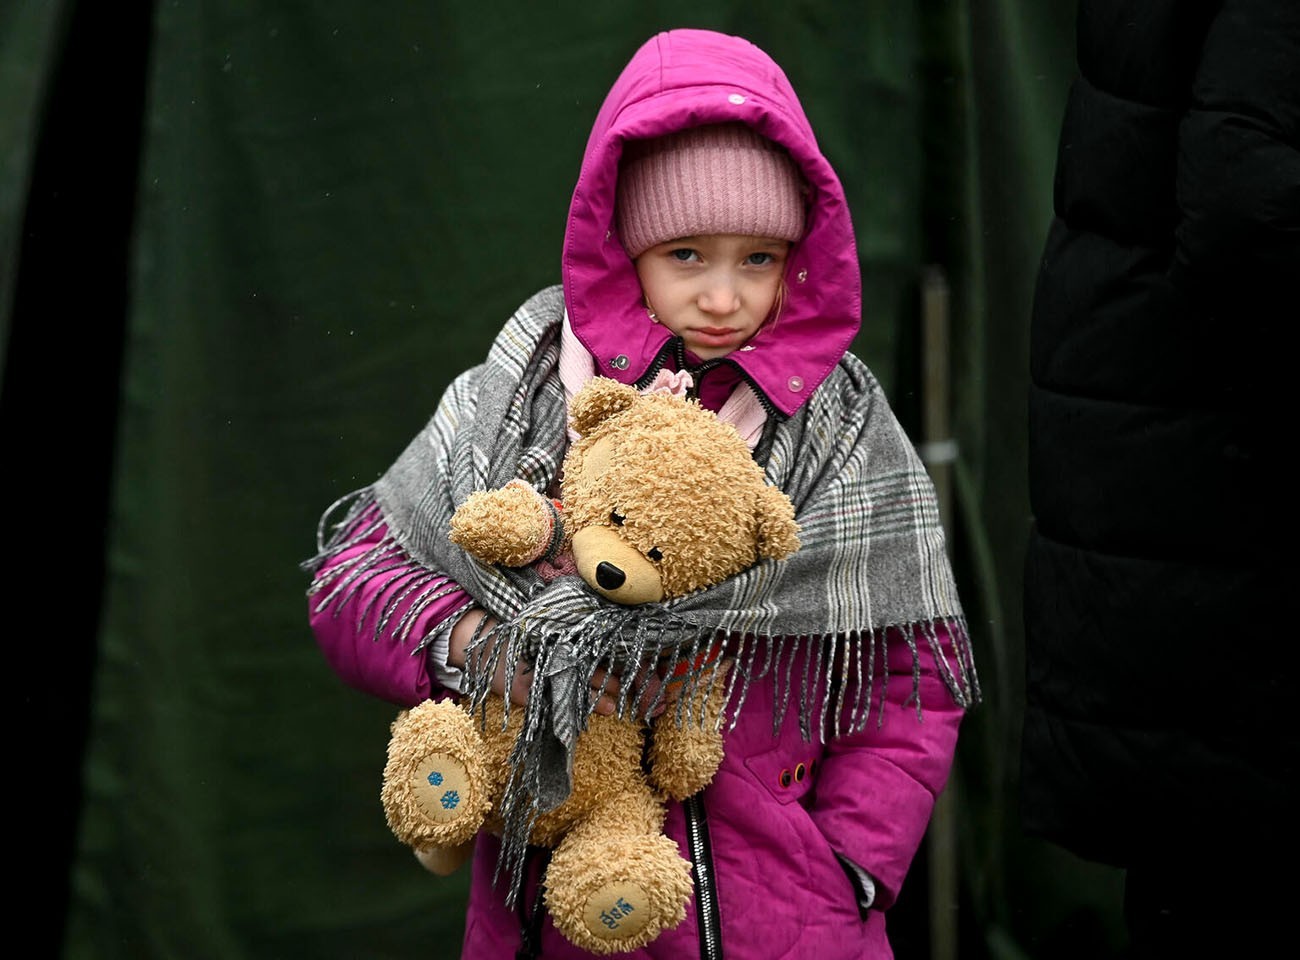 © UNICEF/UN0601050/Doychinov/AFP